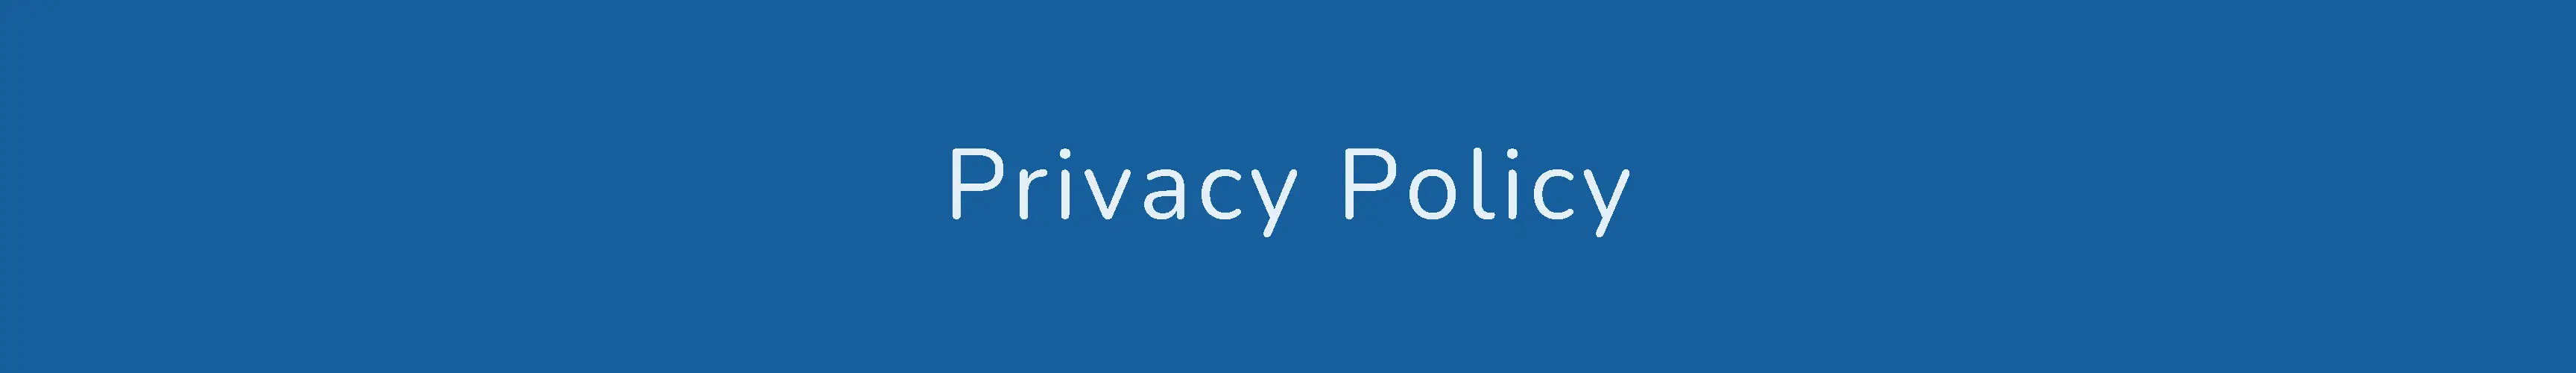 Meditationair.com privacy policy banner